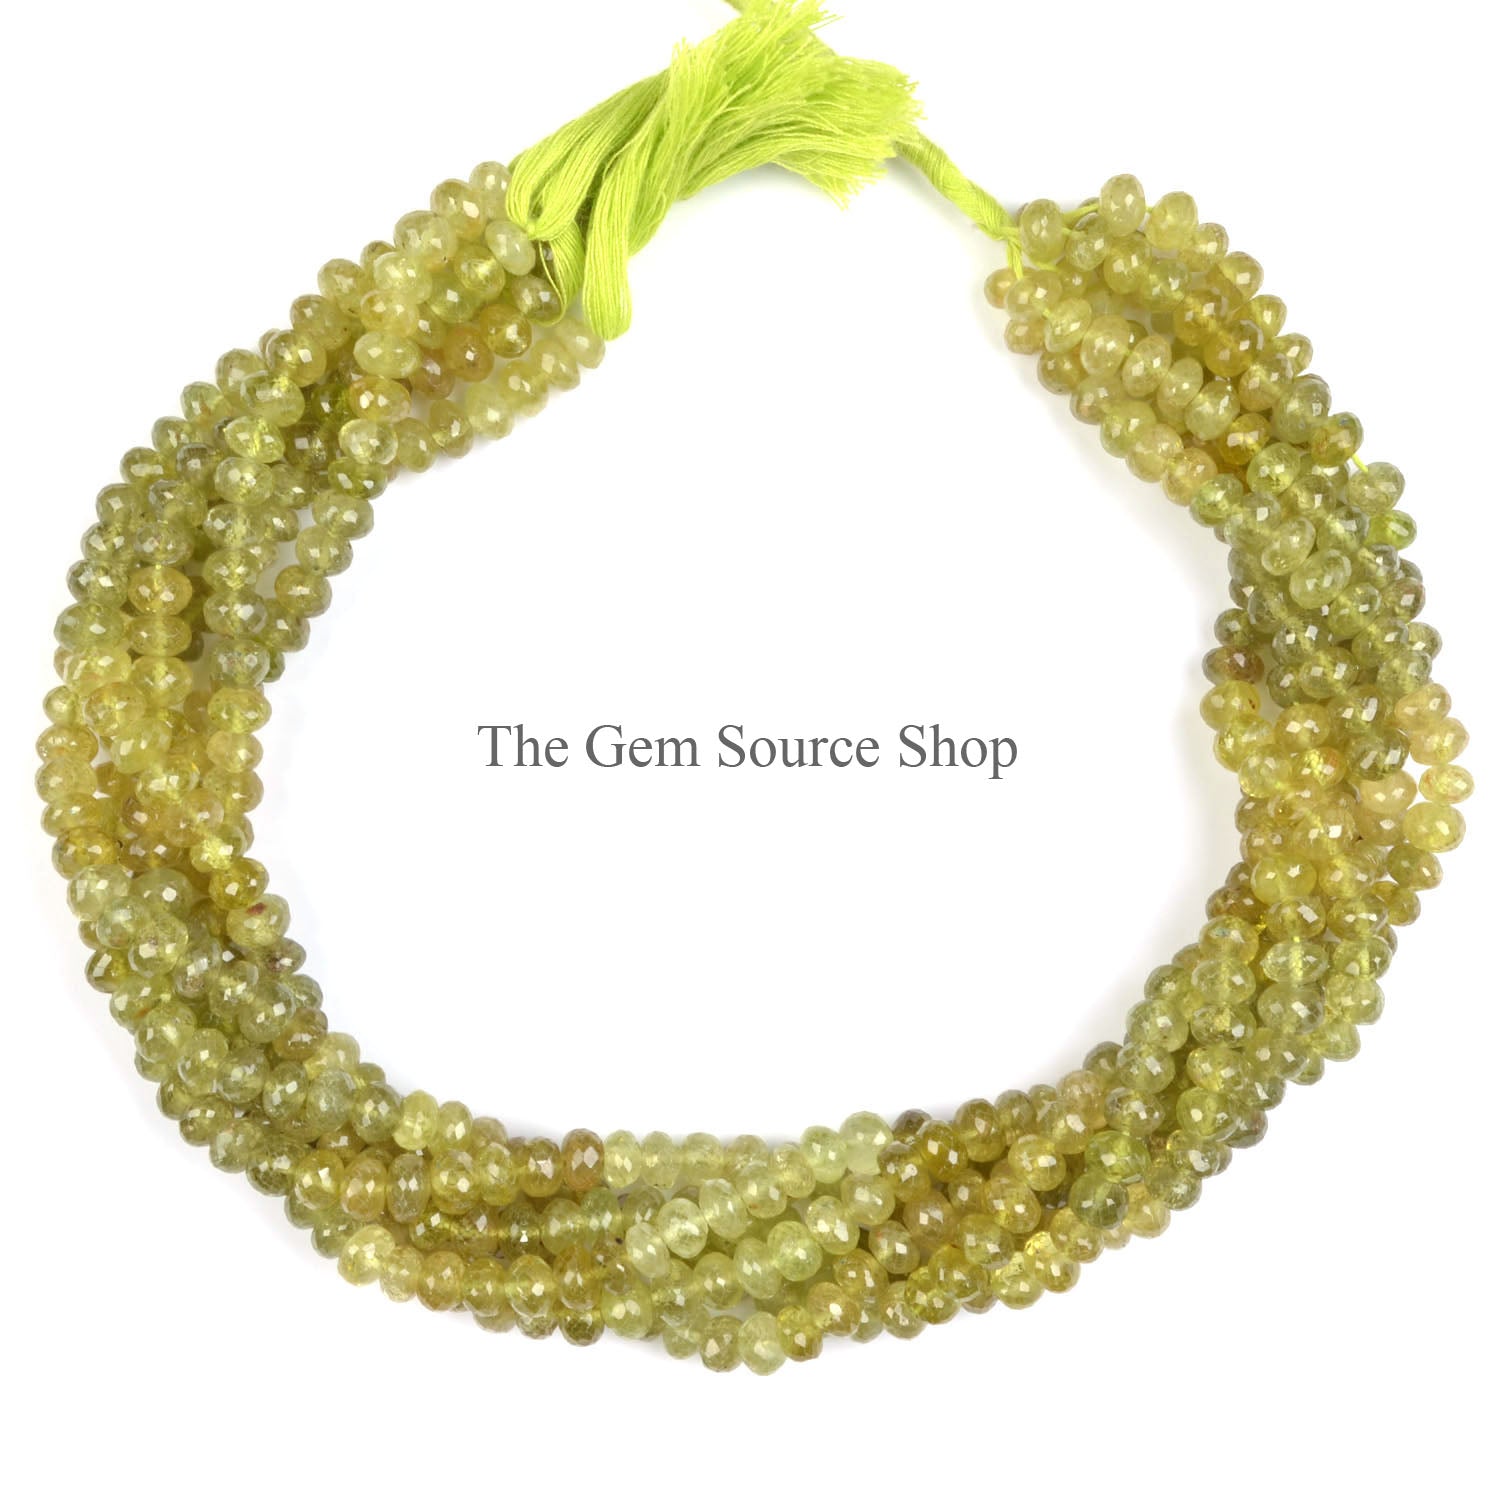 Grossular Garnet Faceted Rondelle Gemstone Beads